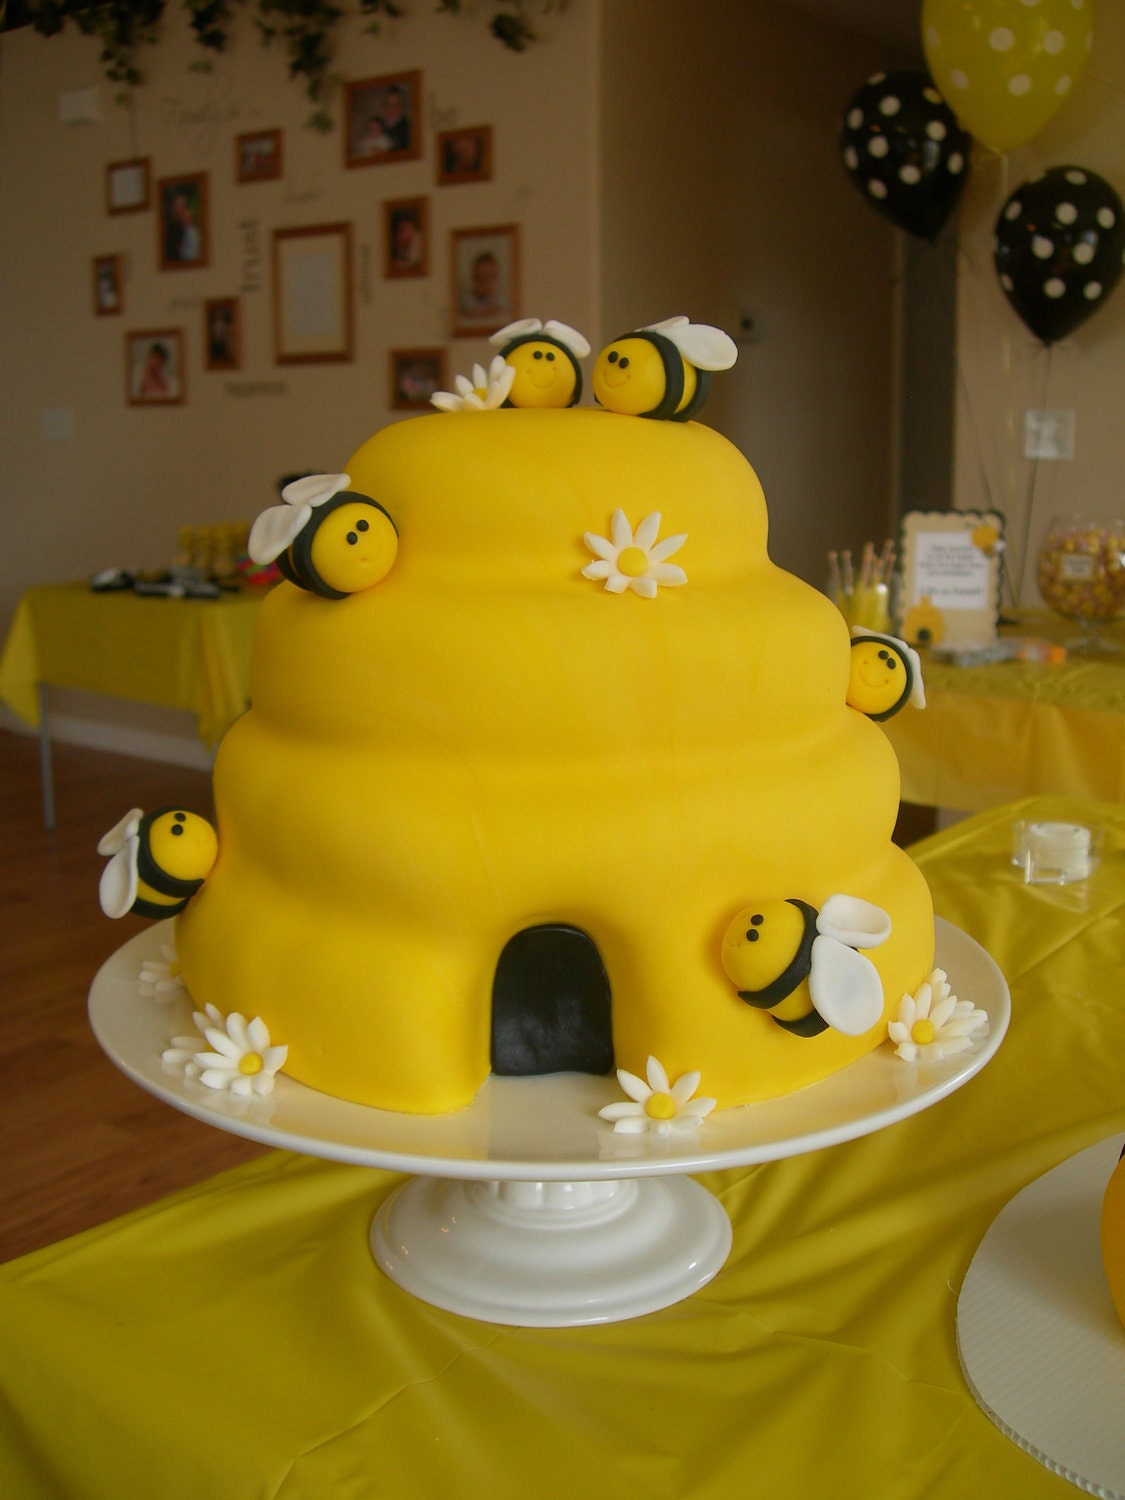 Mini Bumble Bee Cupcake/Cookie Toppers - 1 Dozen